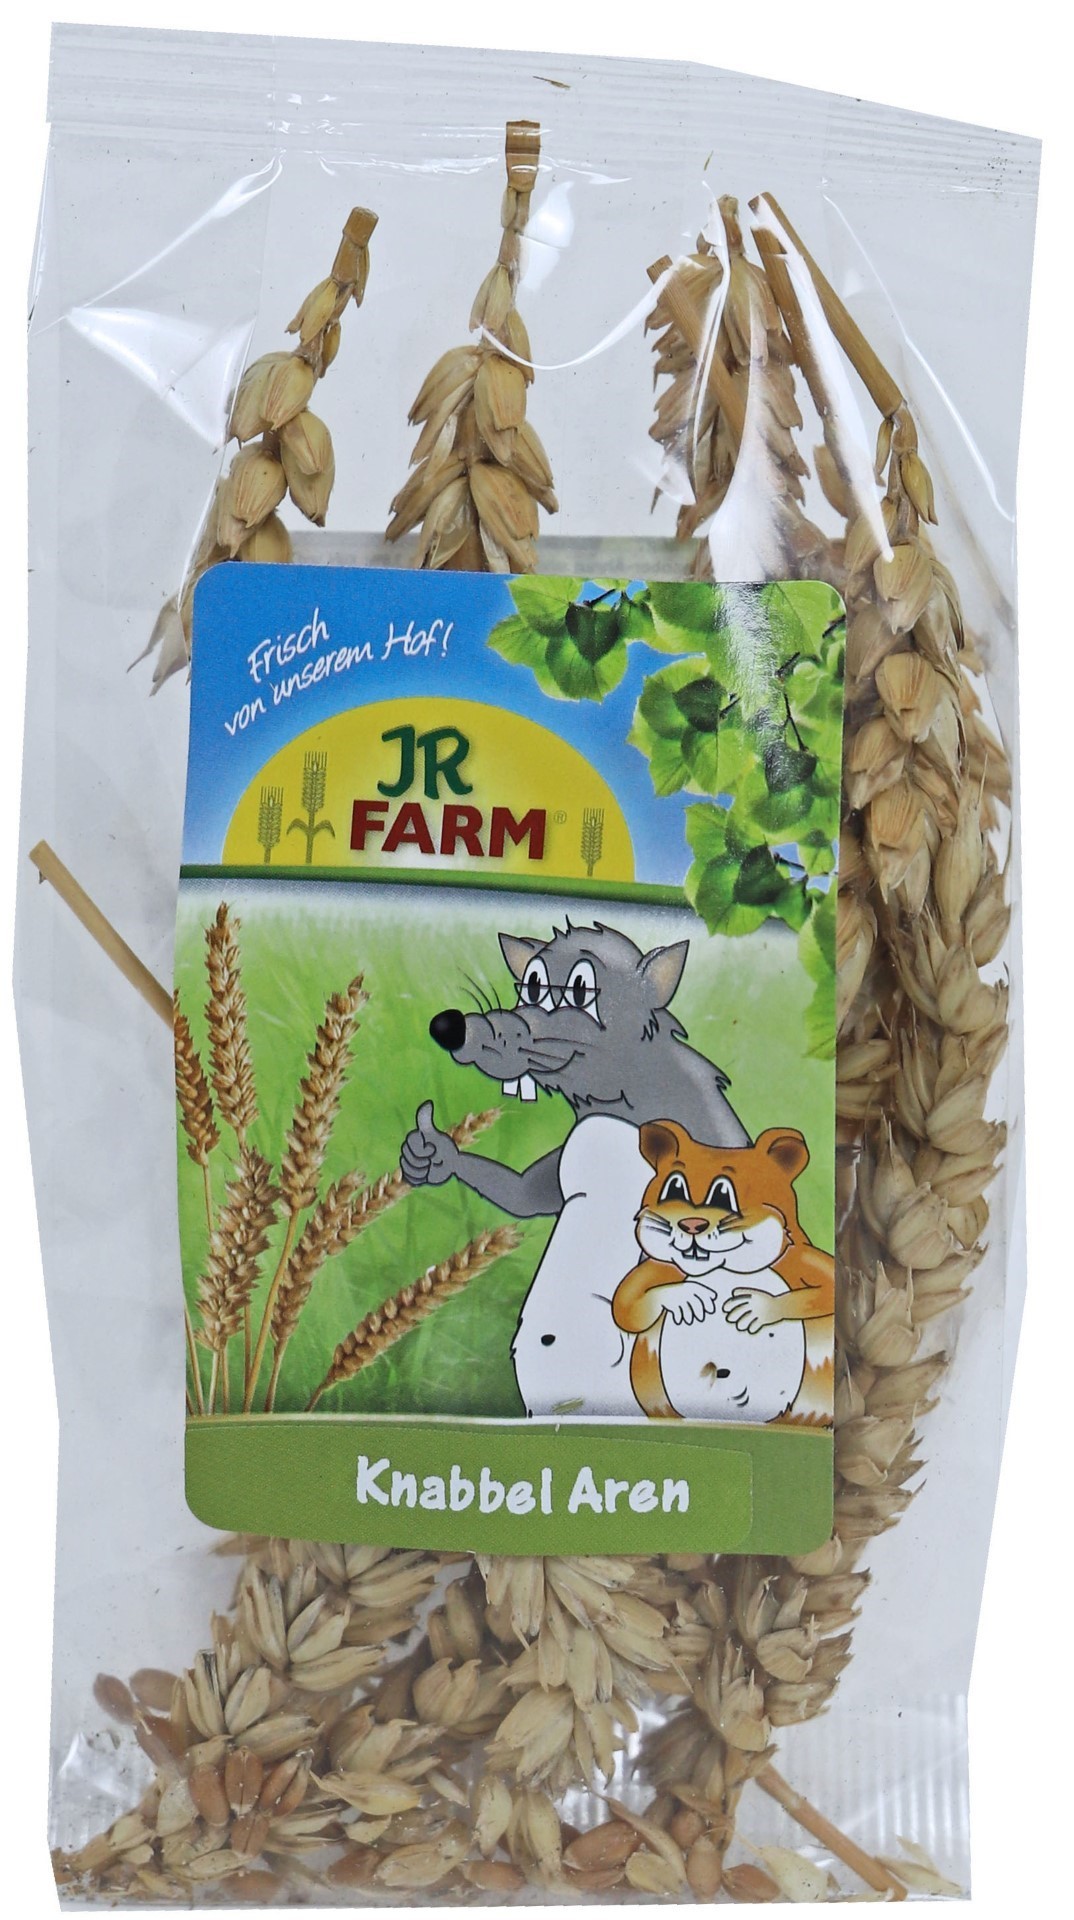 JR Farm knaagdier knabbel aren 30 gram 03147